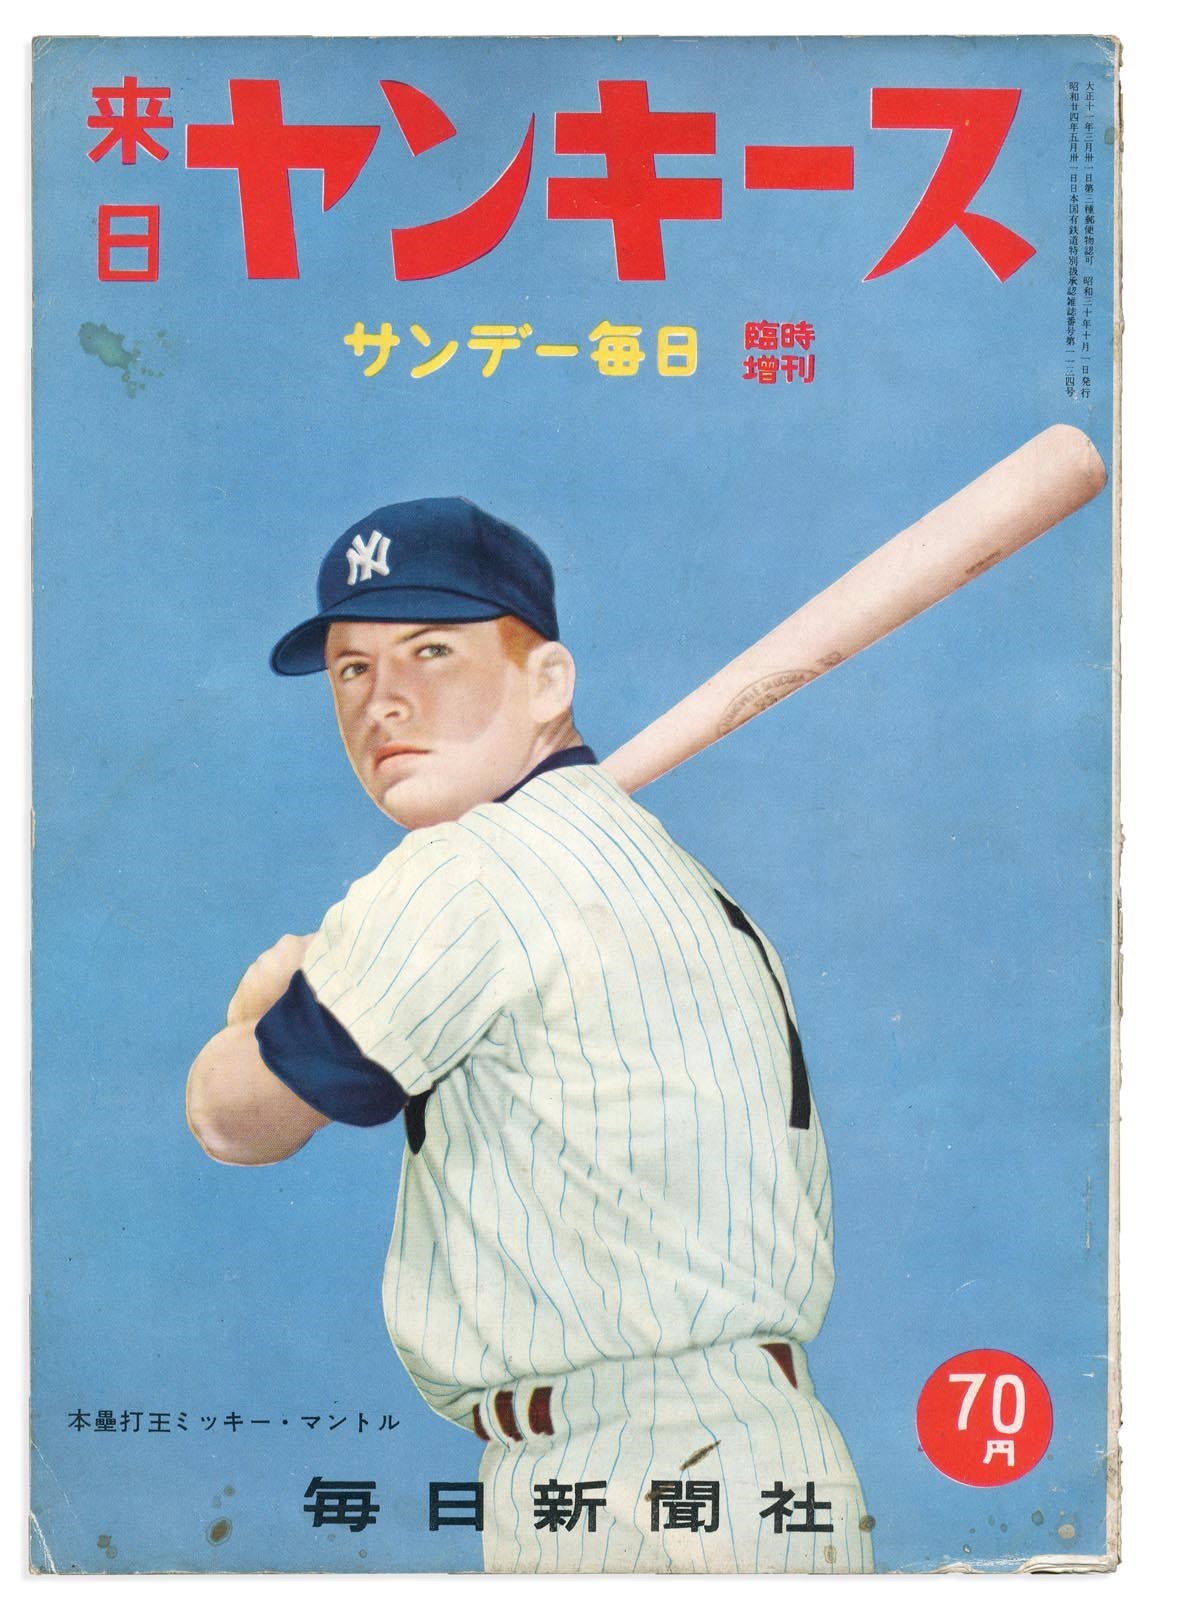 Mickey Mantle 1955 New York Yankees Japan Tour Magazine